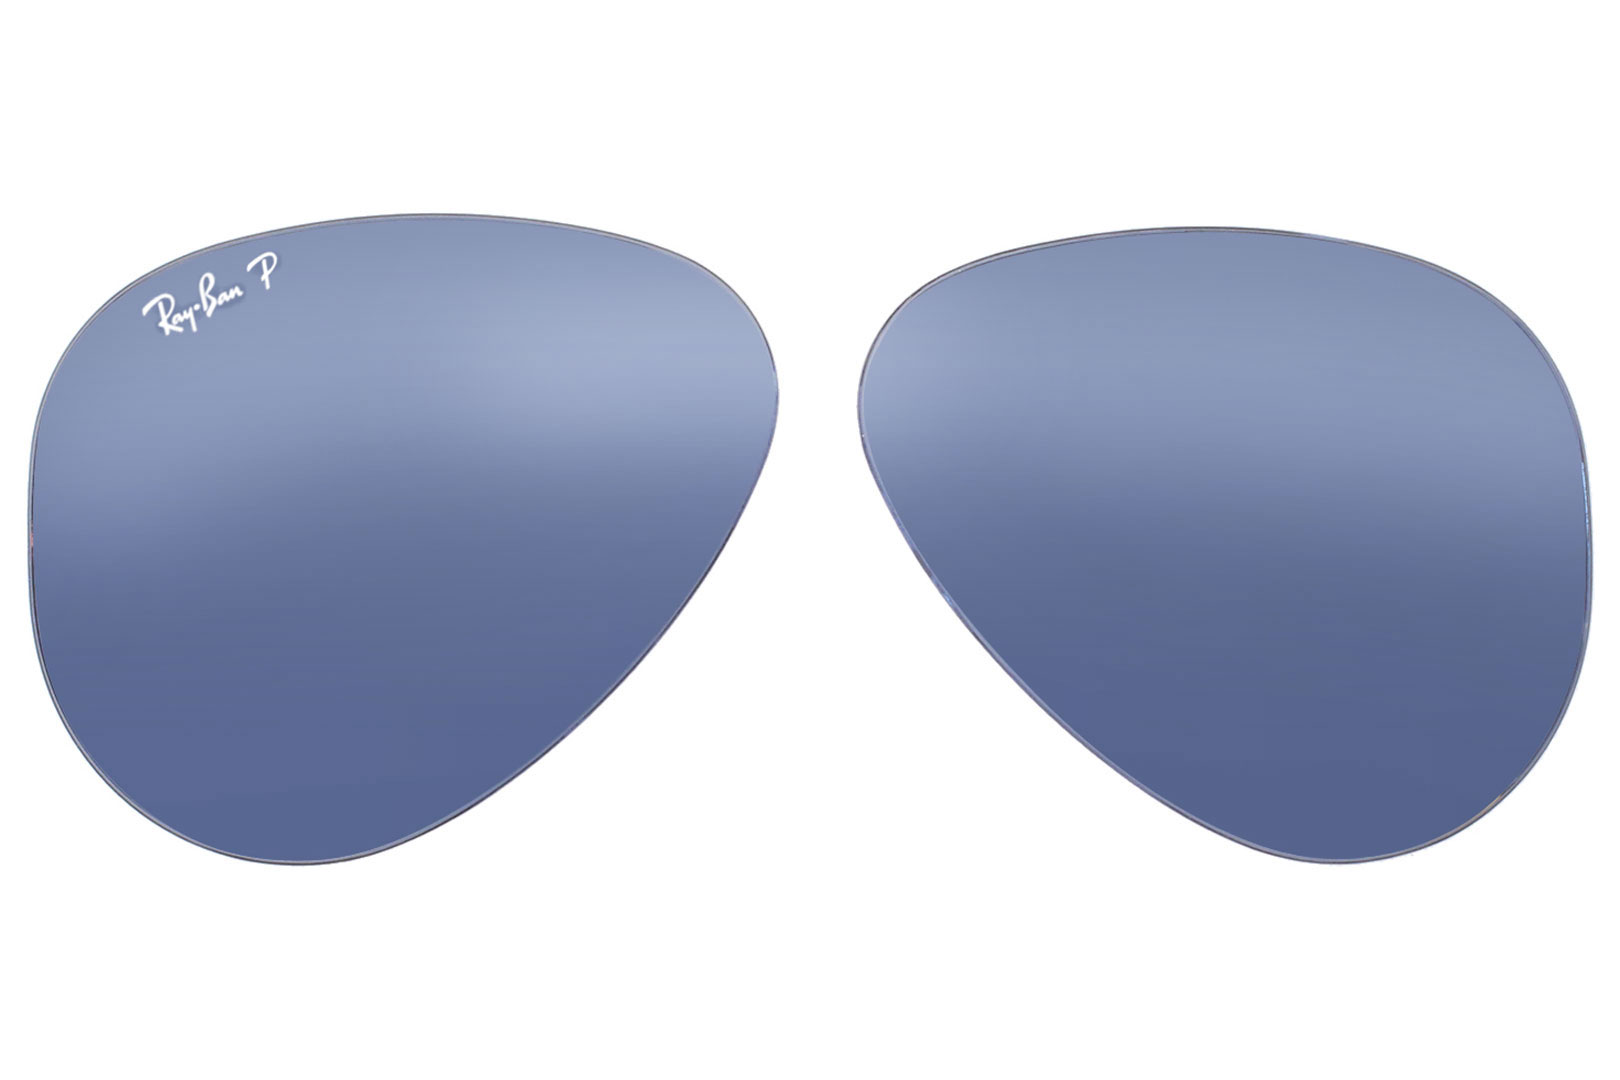 Ray Ban Original Aviator RB3025 & RB3026 Sunglasses Genuine Replacement  Lenses 